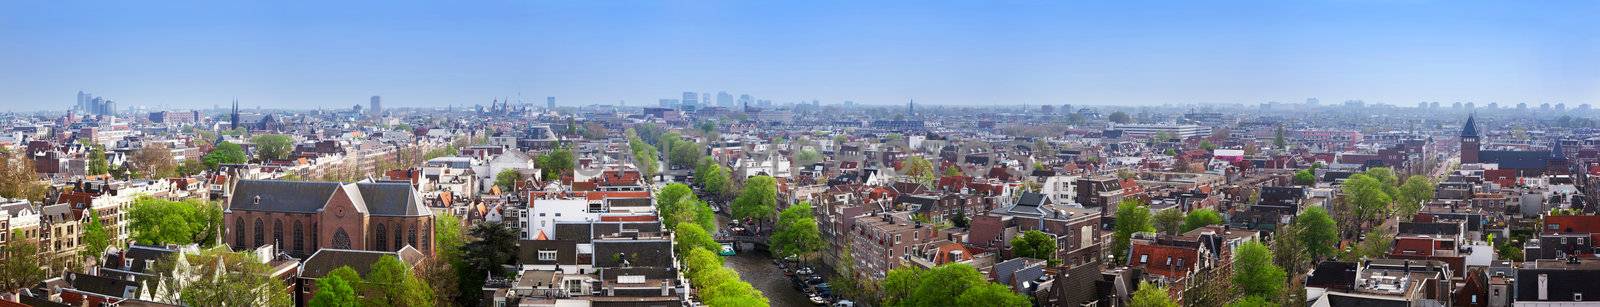 Amsterdam panorama, Holland, Netherlands. City view from Westerkerk